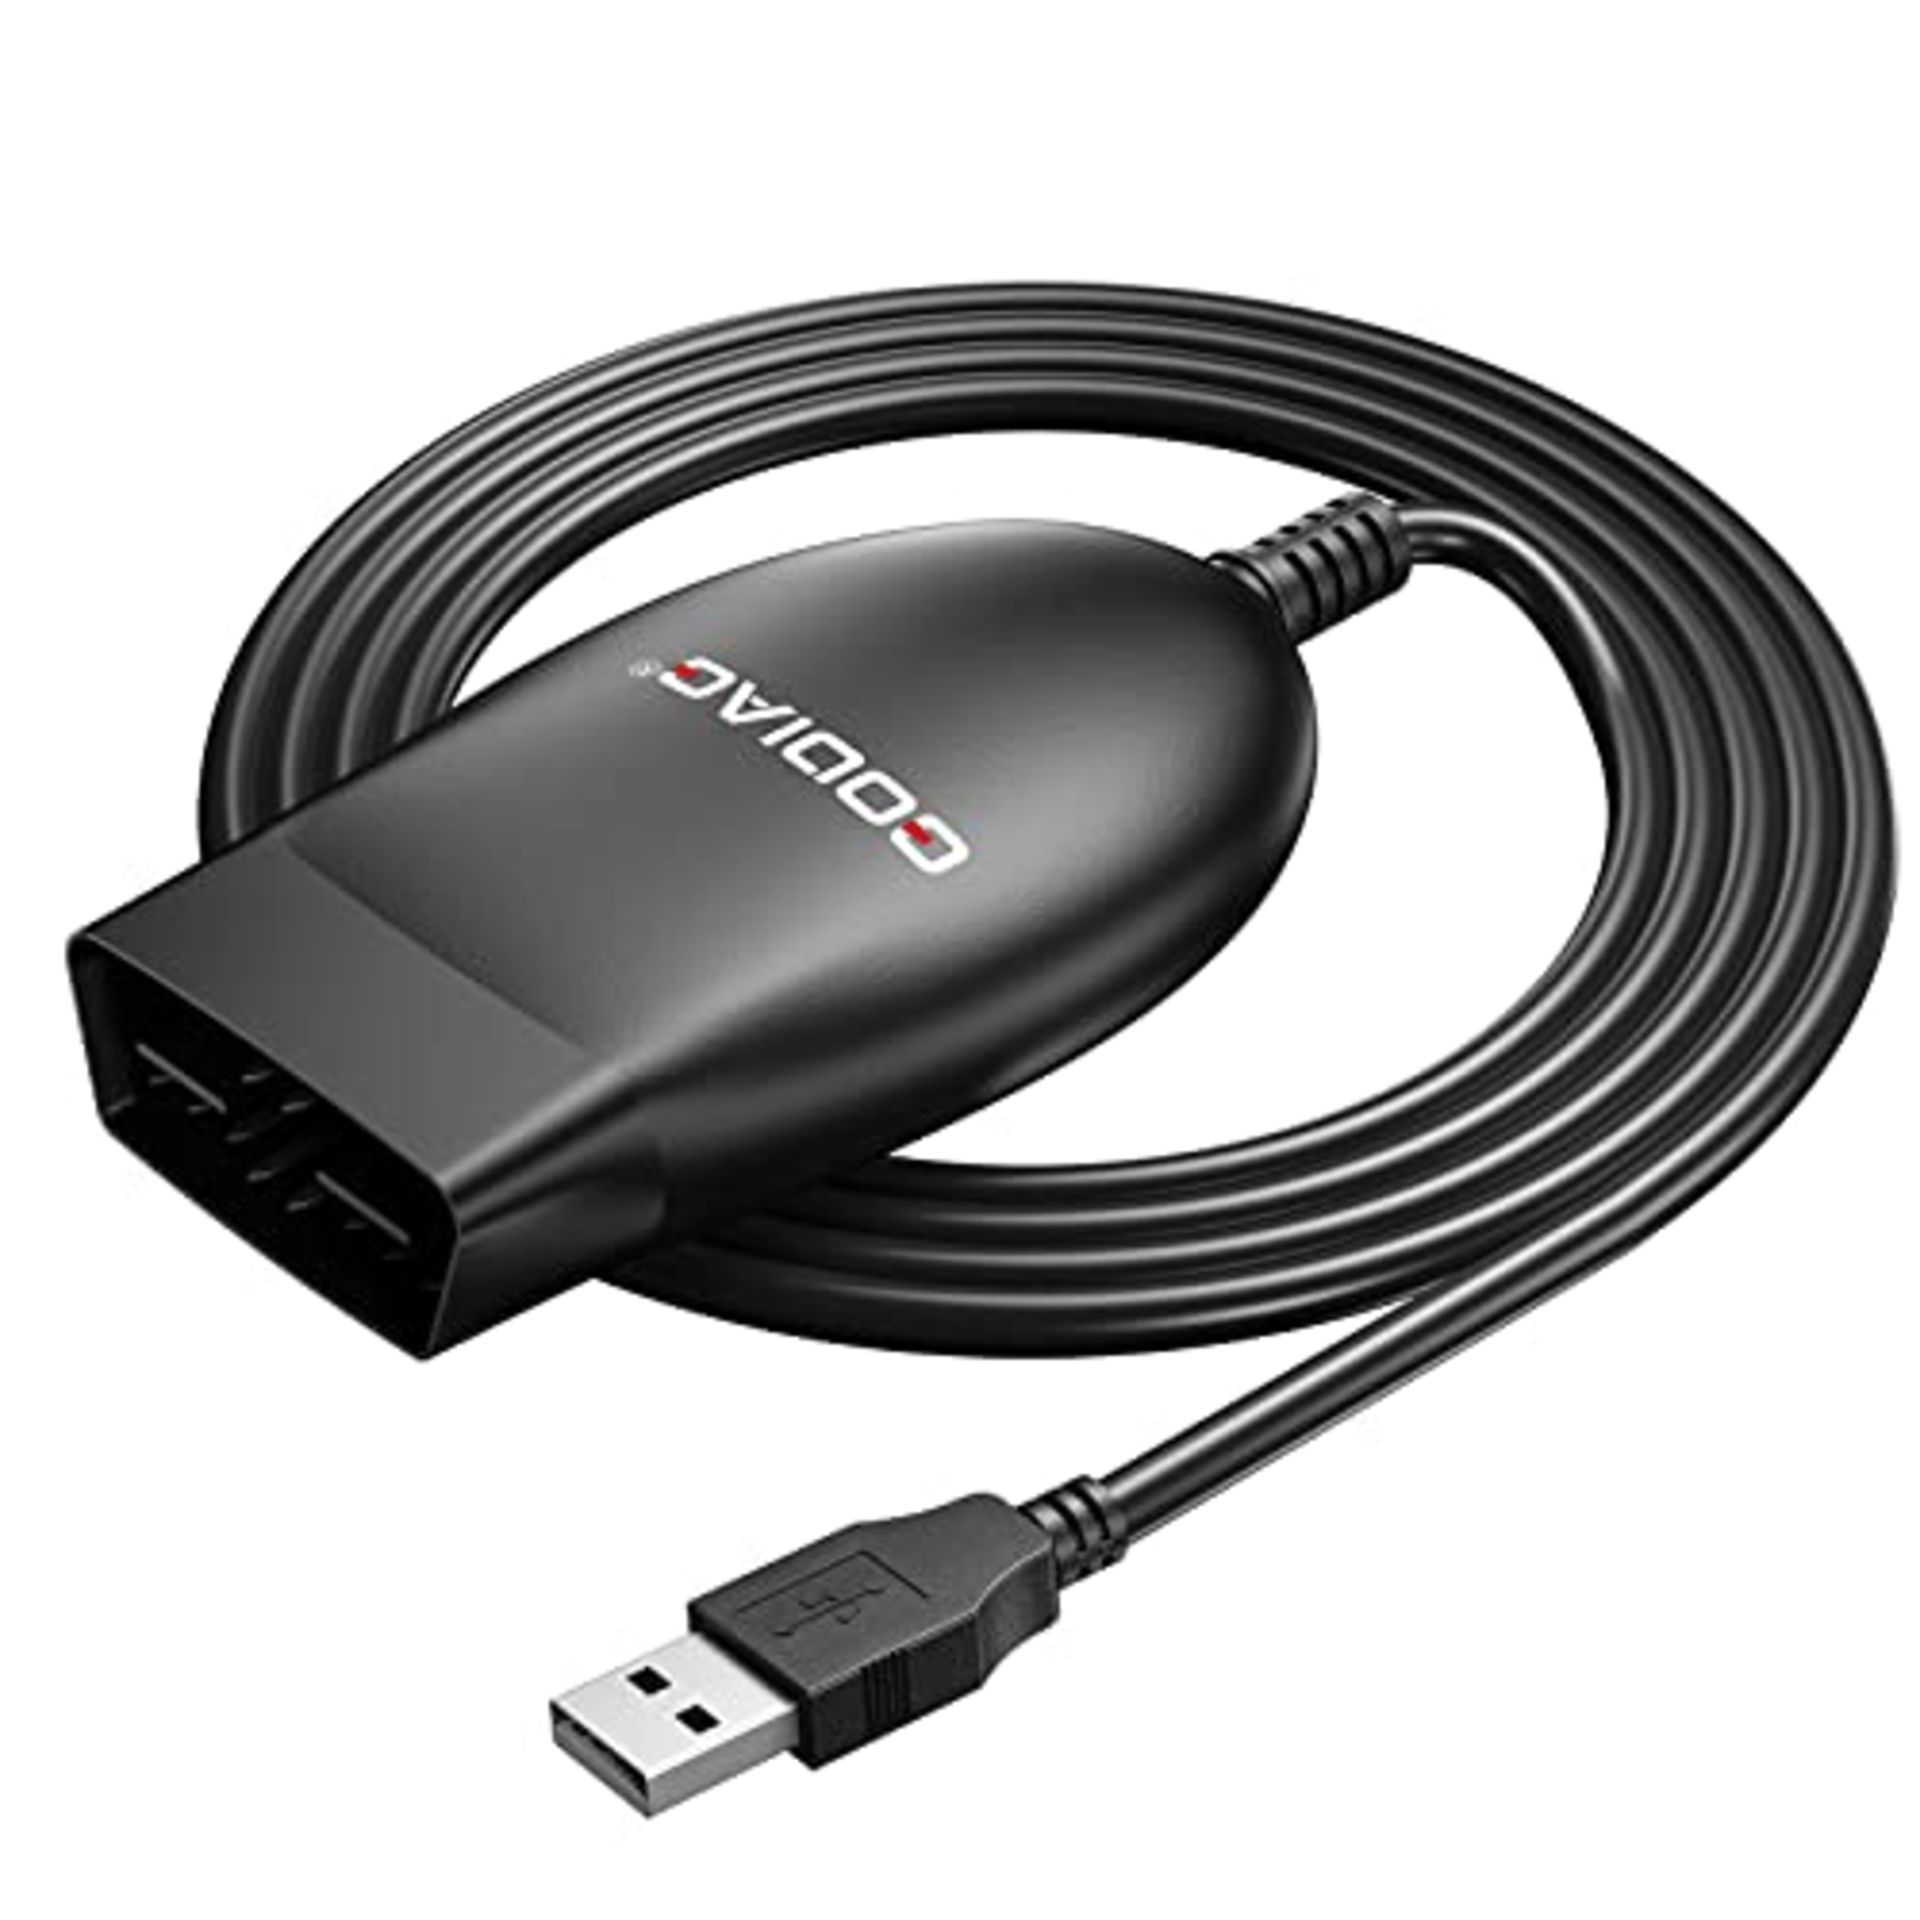 J2534 Openport 2.0 Cable, GODIAG OBD2 USB Adapter ECU Diagnostic Tool, Flash Chip Tunn - Image 7 of 8